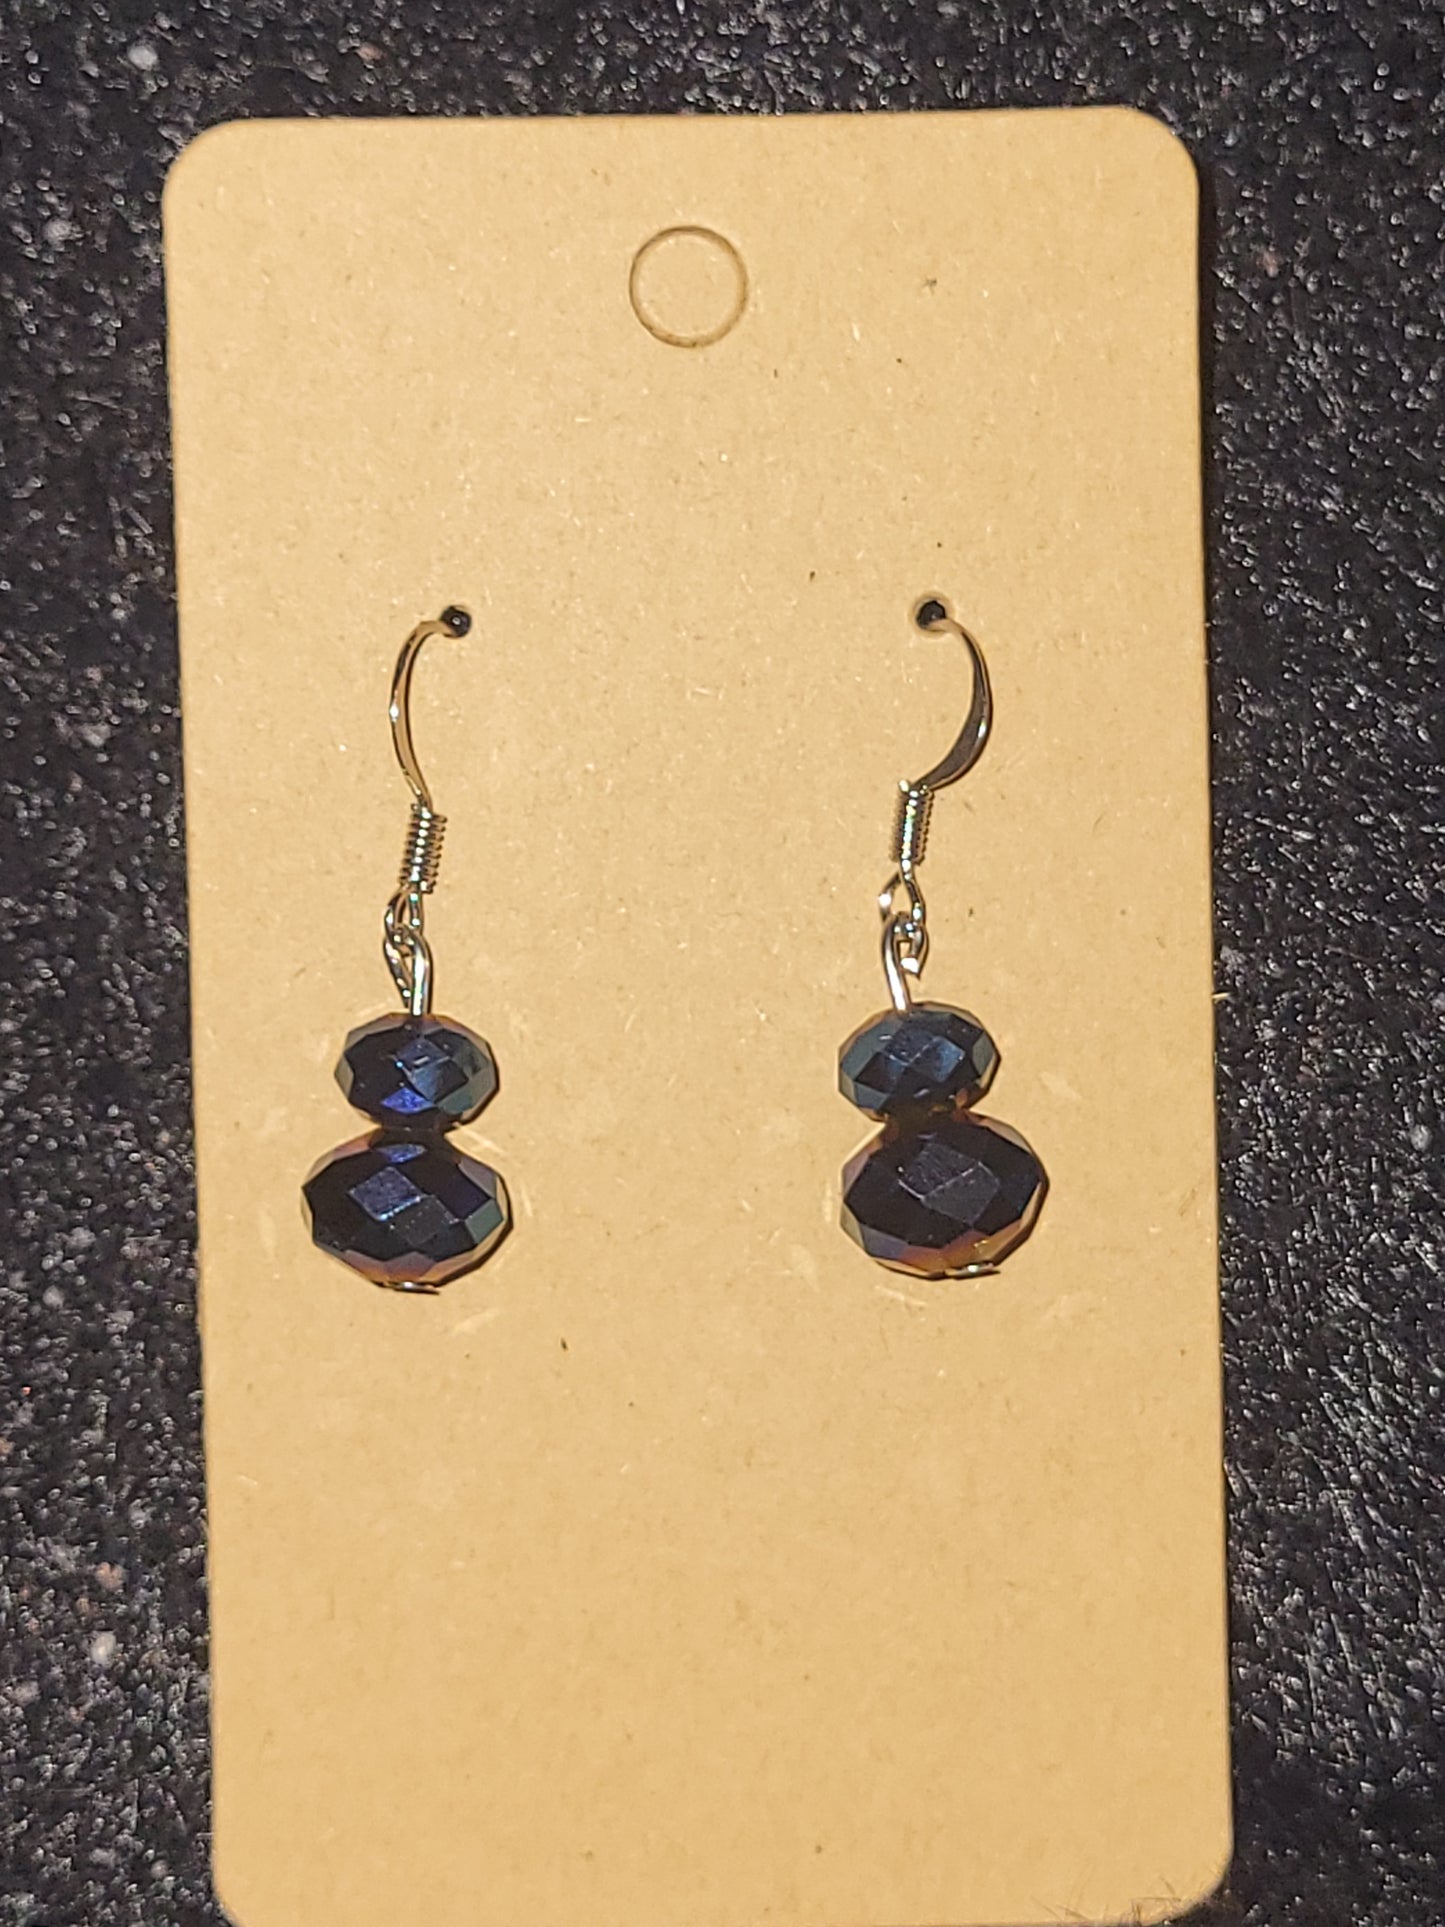 Handcrafted beaded earrings